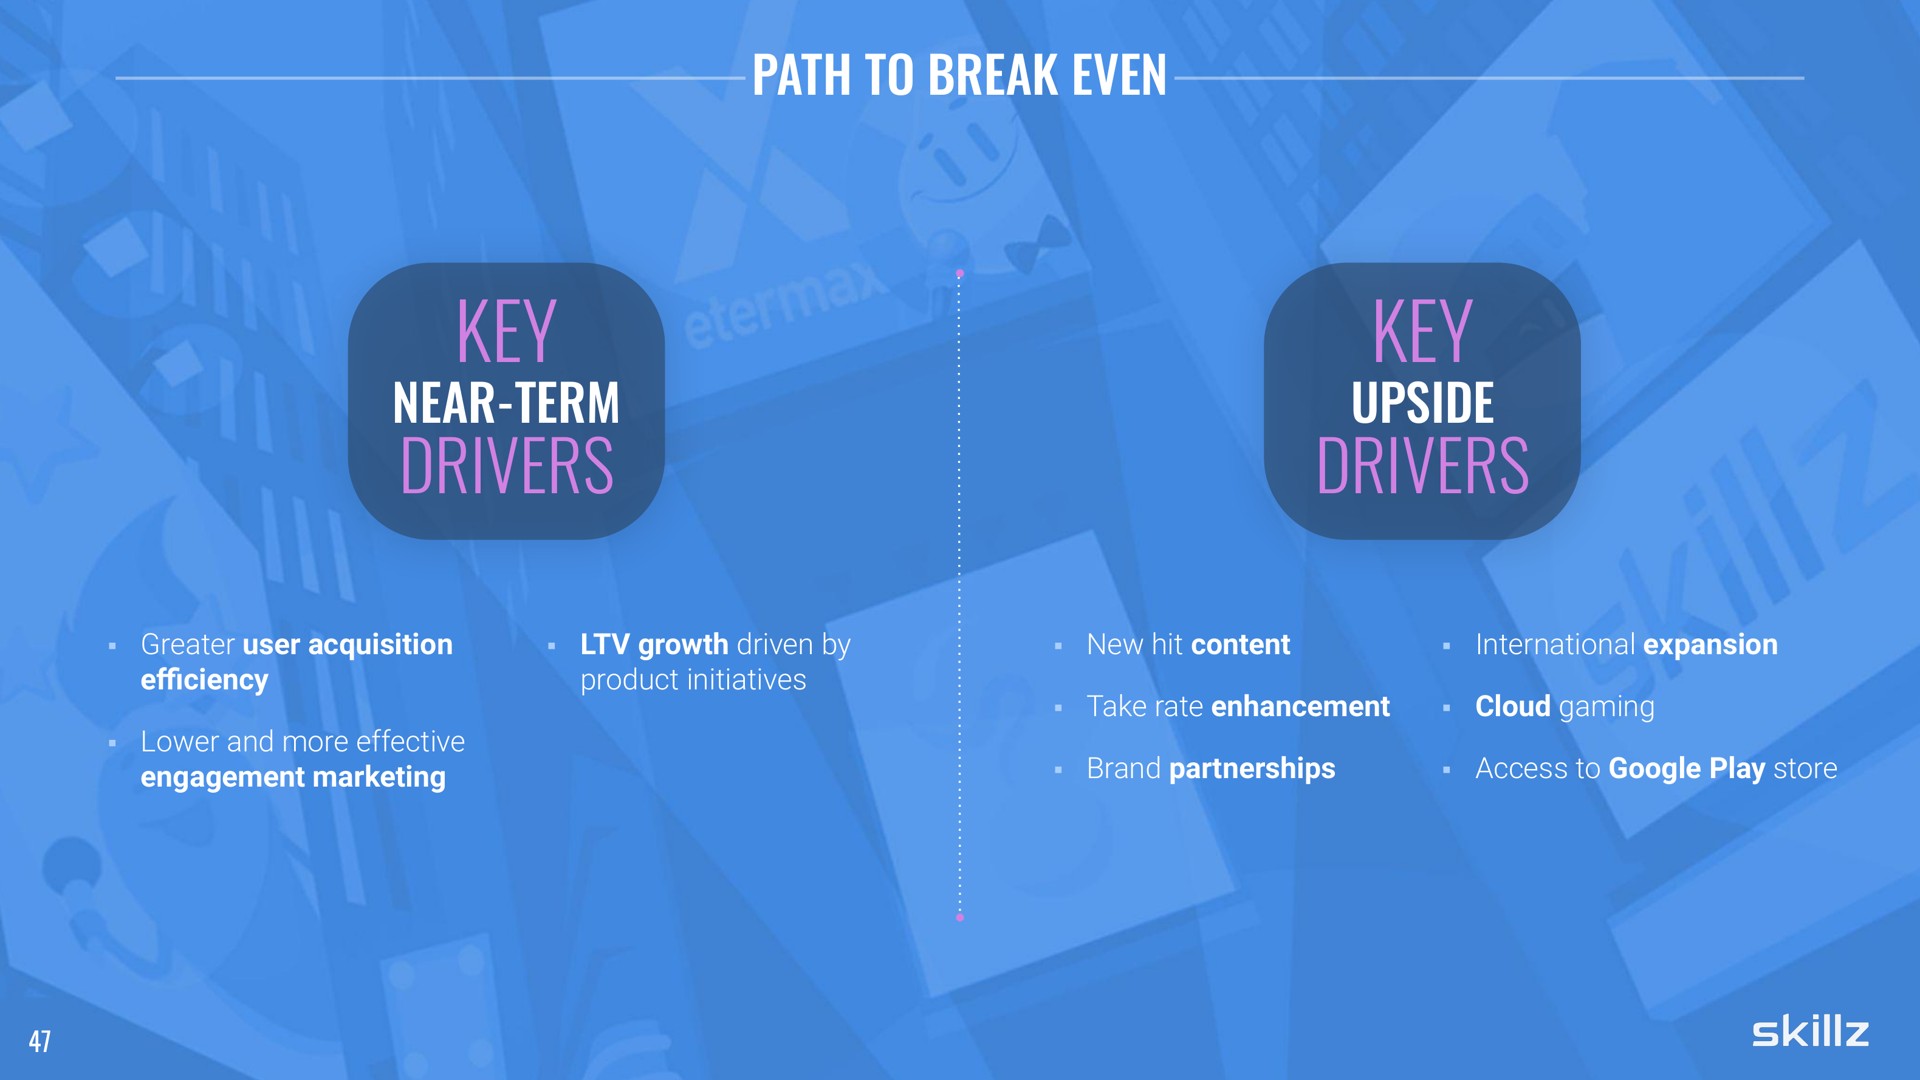 path to break even key near term drivers key upside drivers even me | Skillz